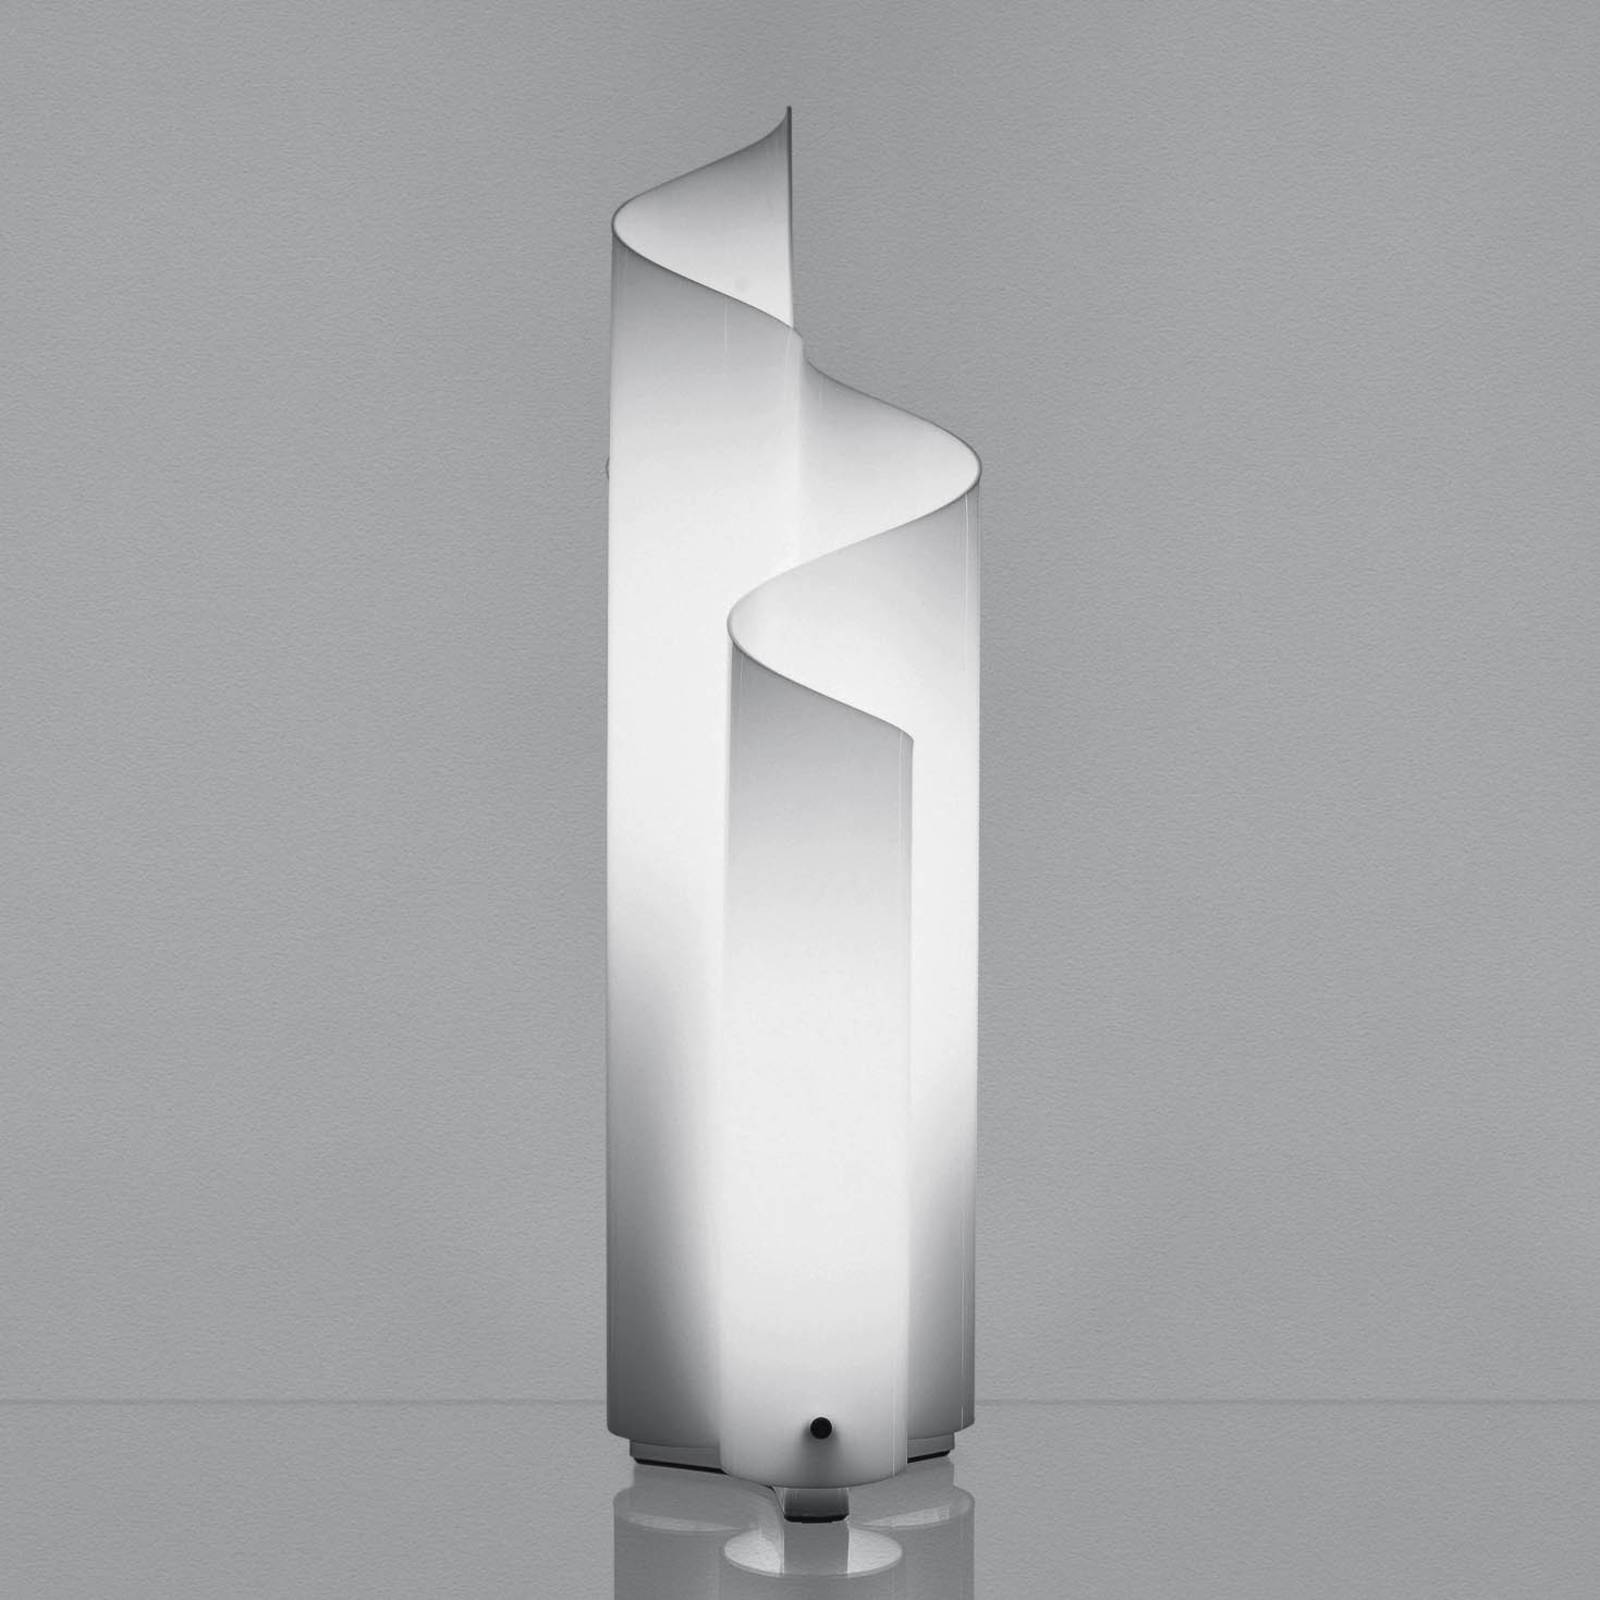 Artemide Artemide Mezzachimera stojací lampa, vlnitý design